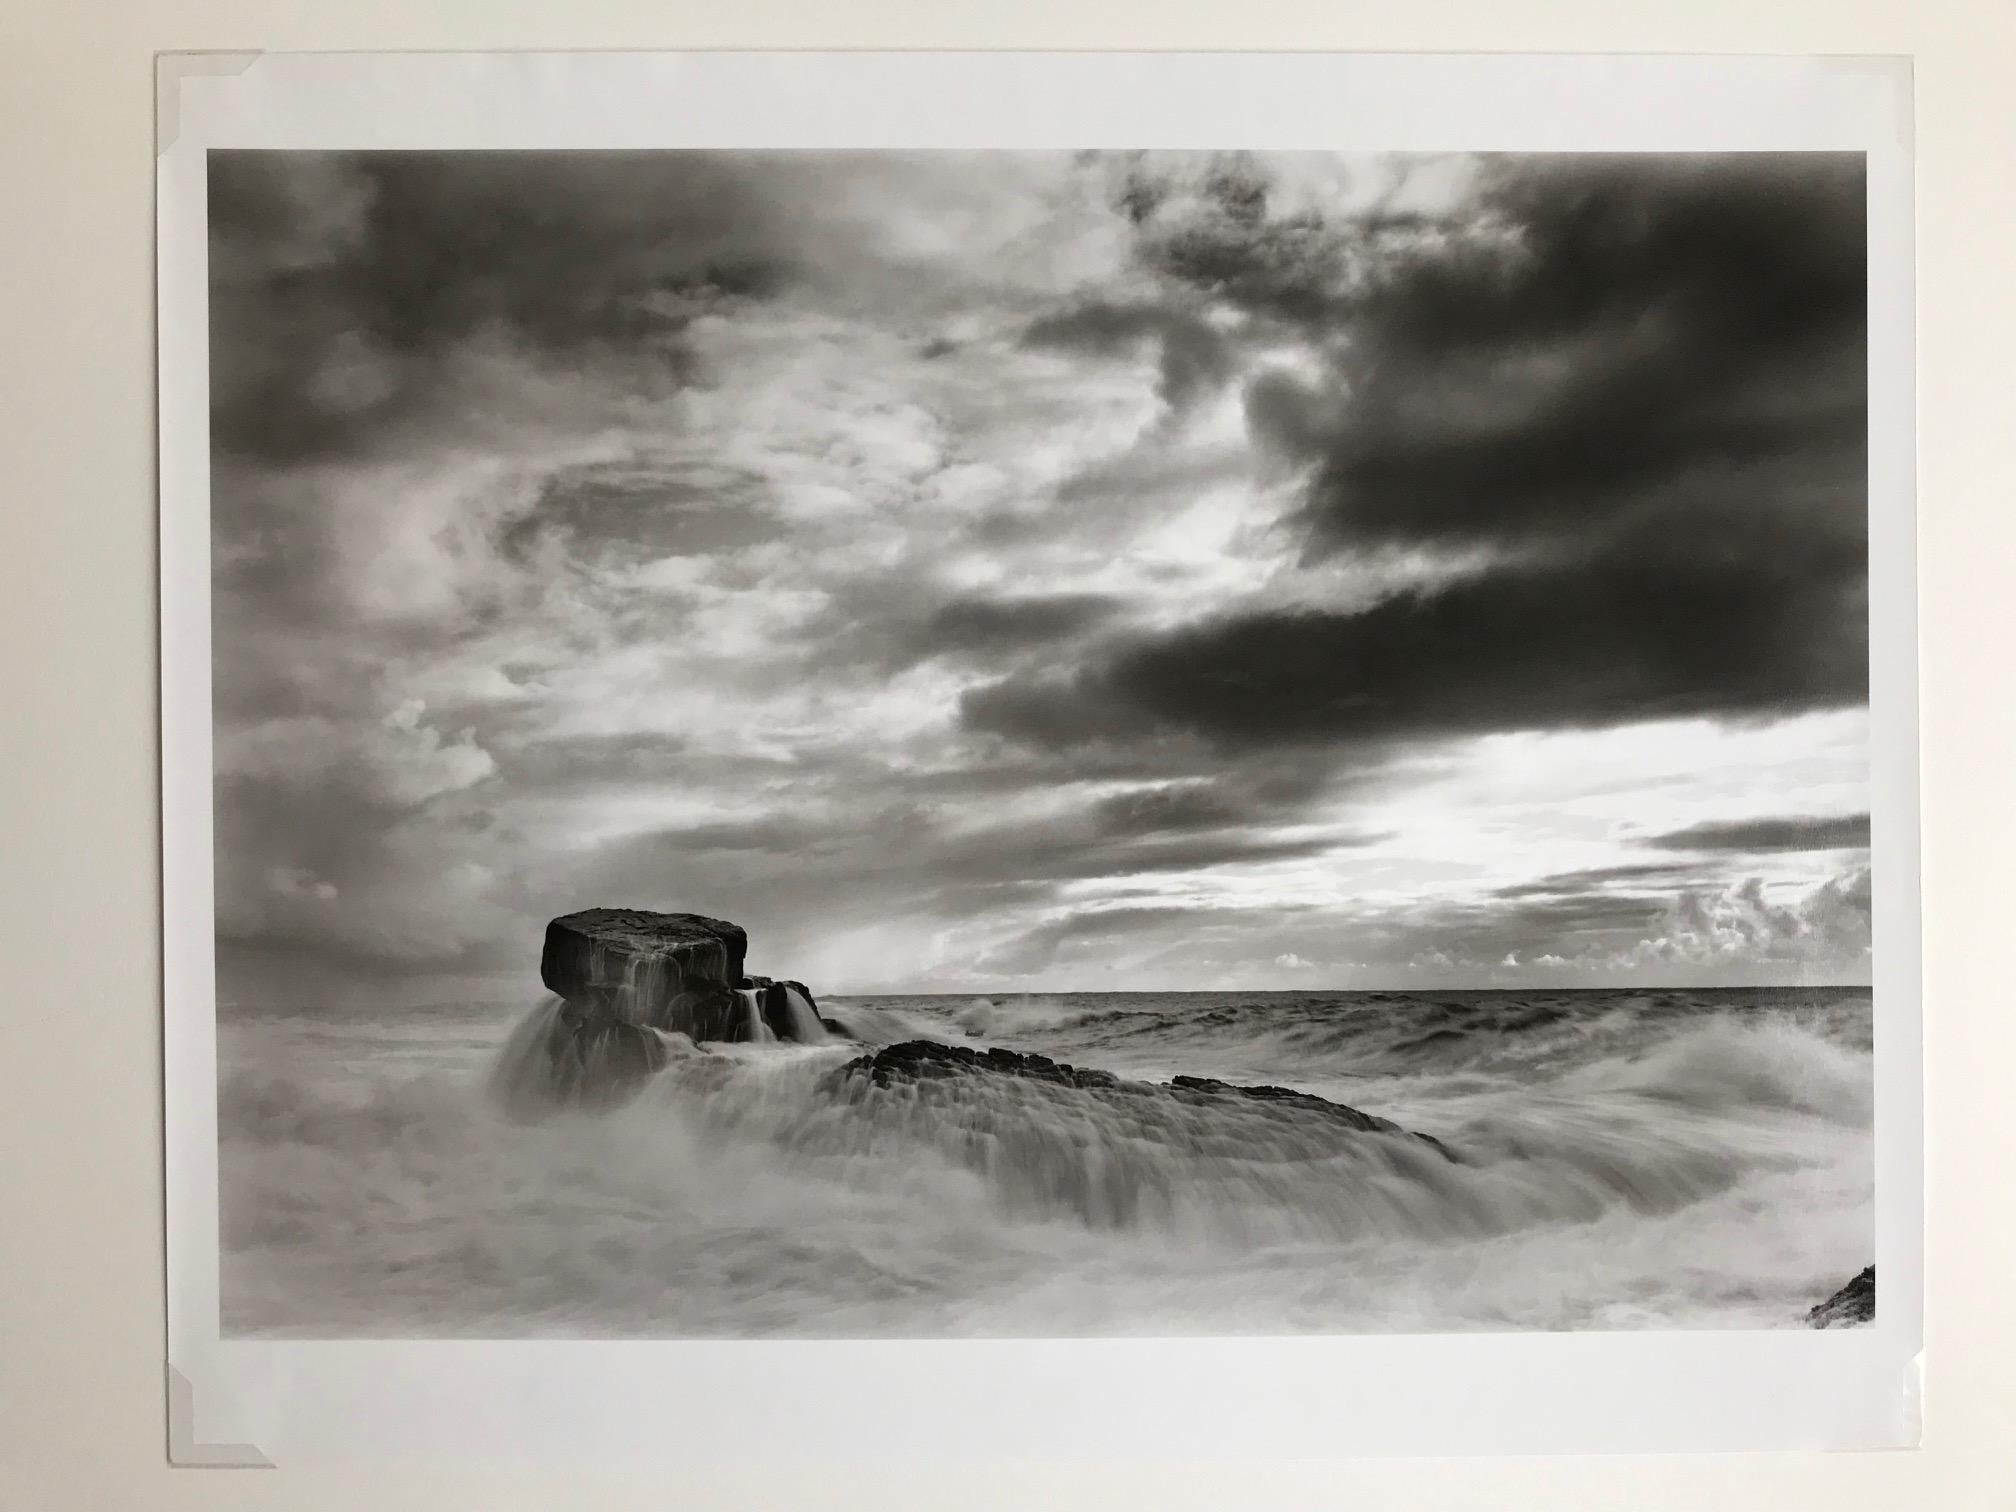 Brad Cole Black and White Photograph - Numina, Etherial Coastal Photograph Black & White Silver Gelatin Large Format 